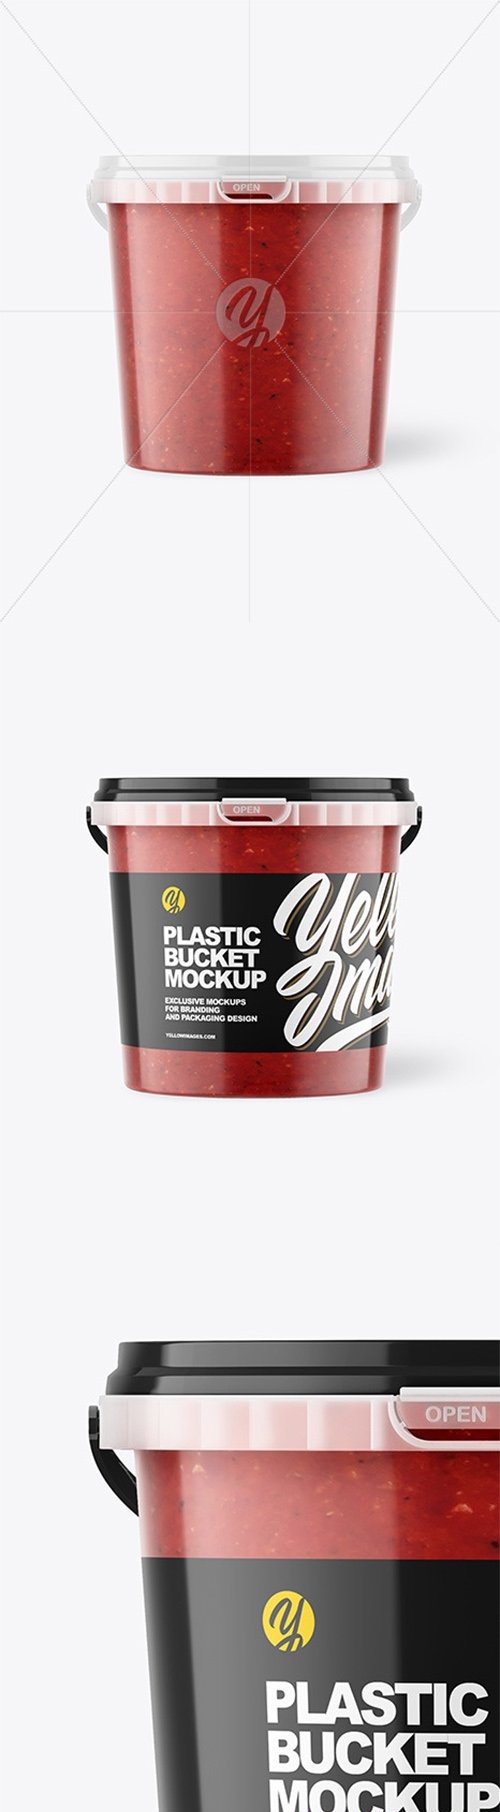 Plastic Bucket with Sauce Mockup 66646